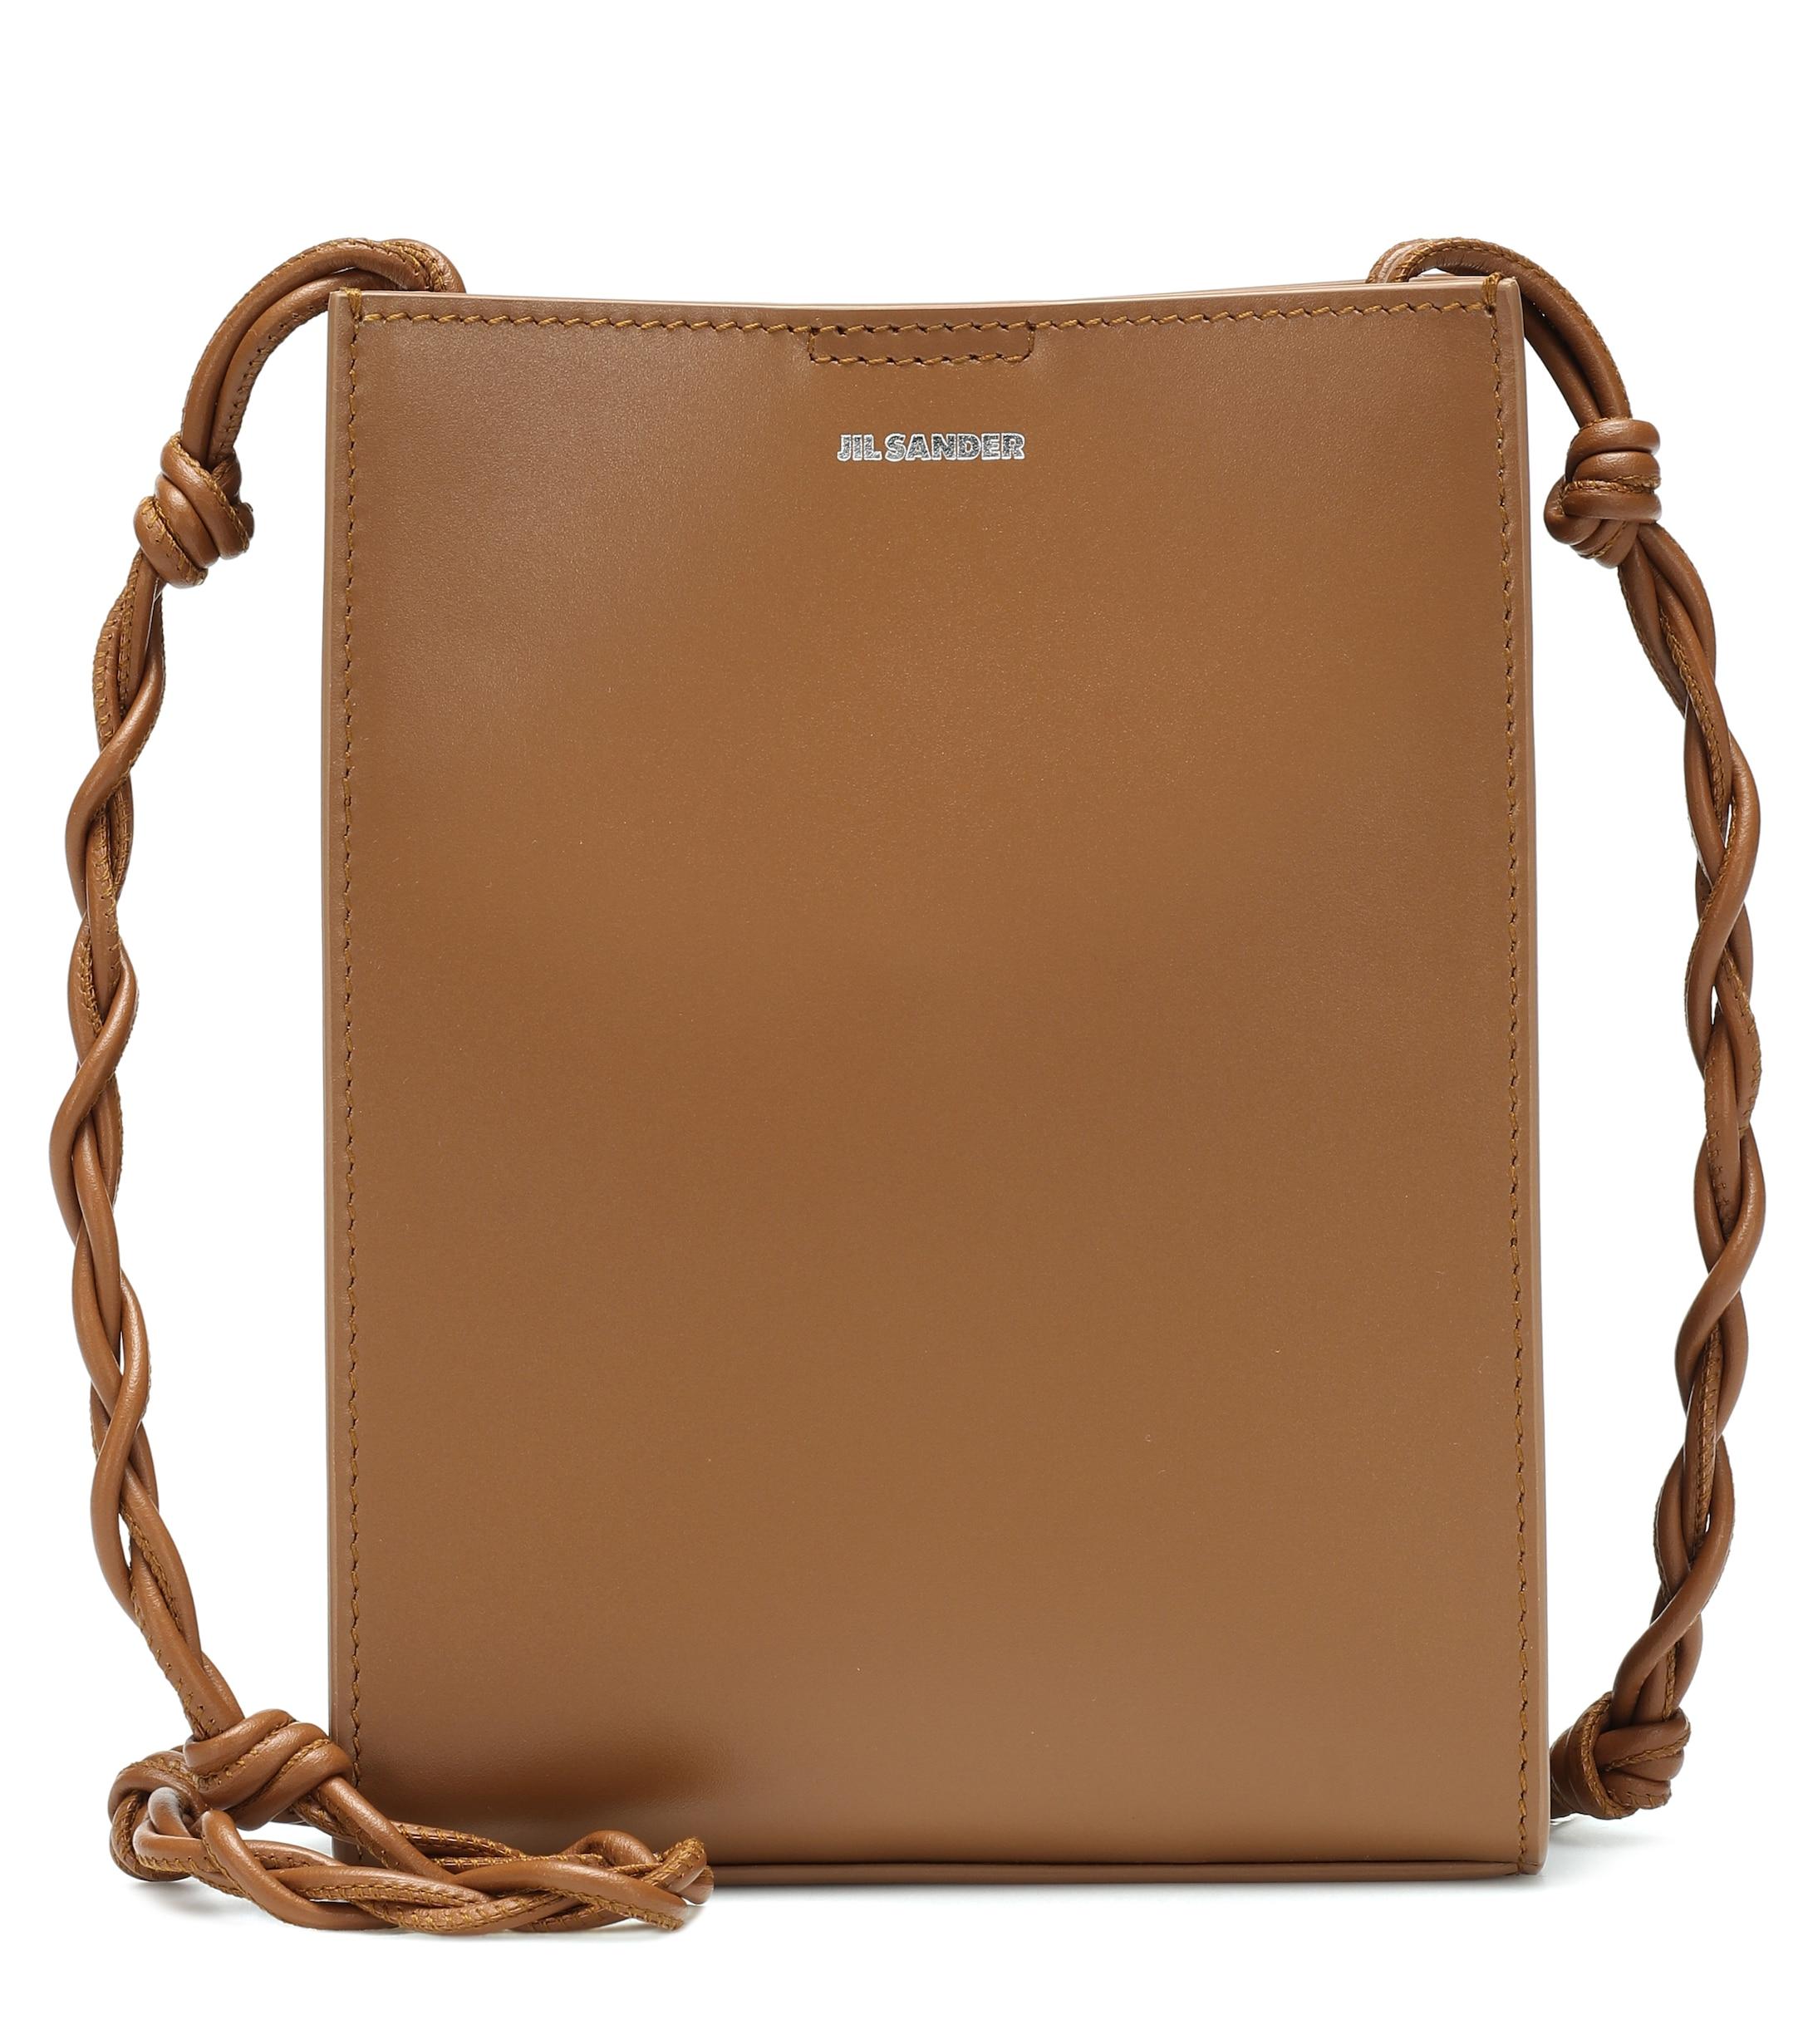 Jil Sander Tangle Small Leather Shoulder Bag in Brown - Lyst